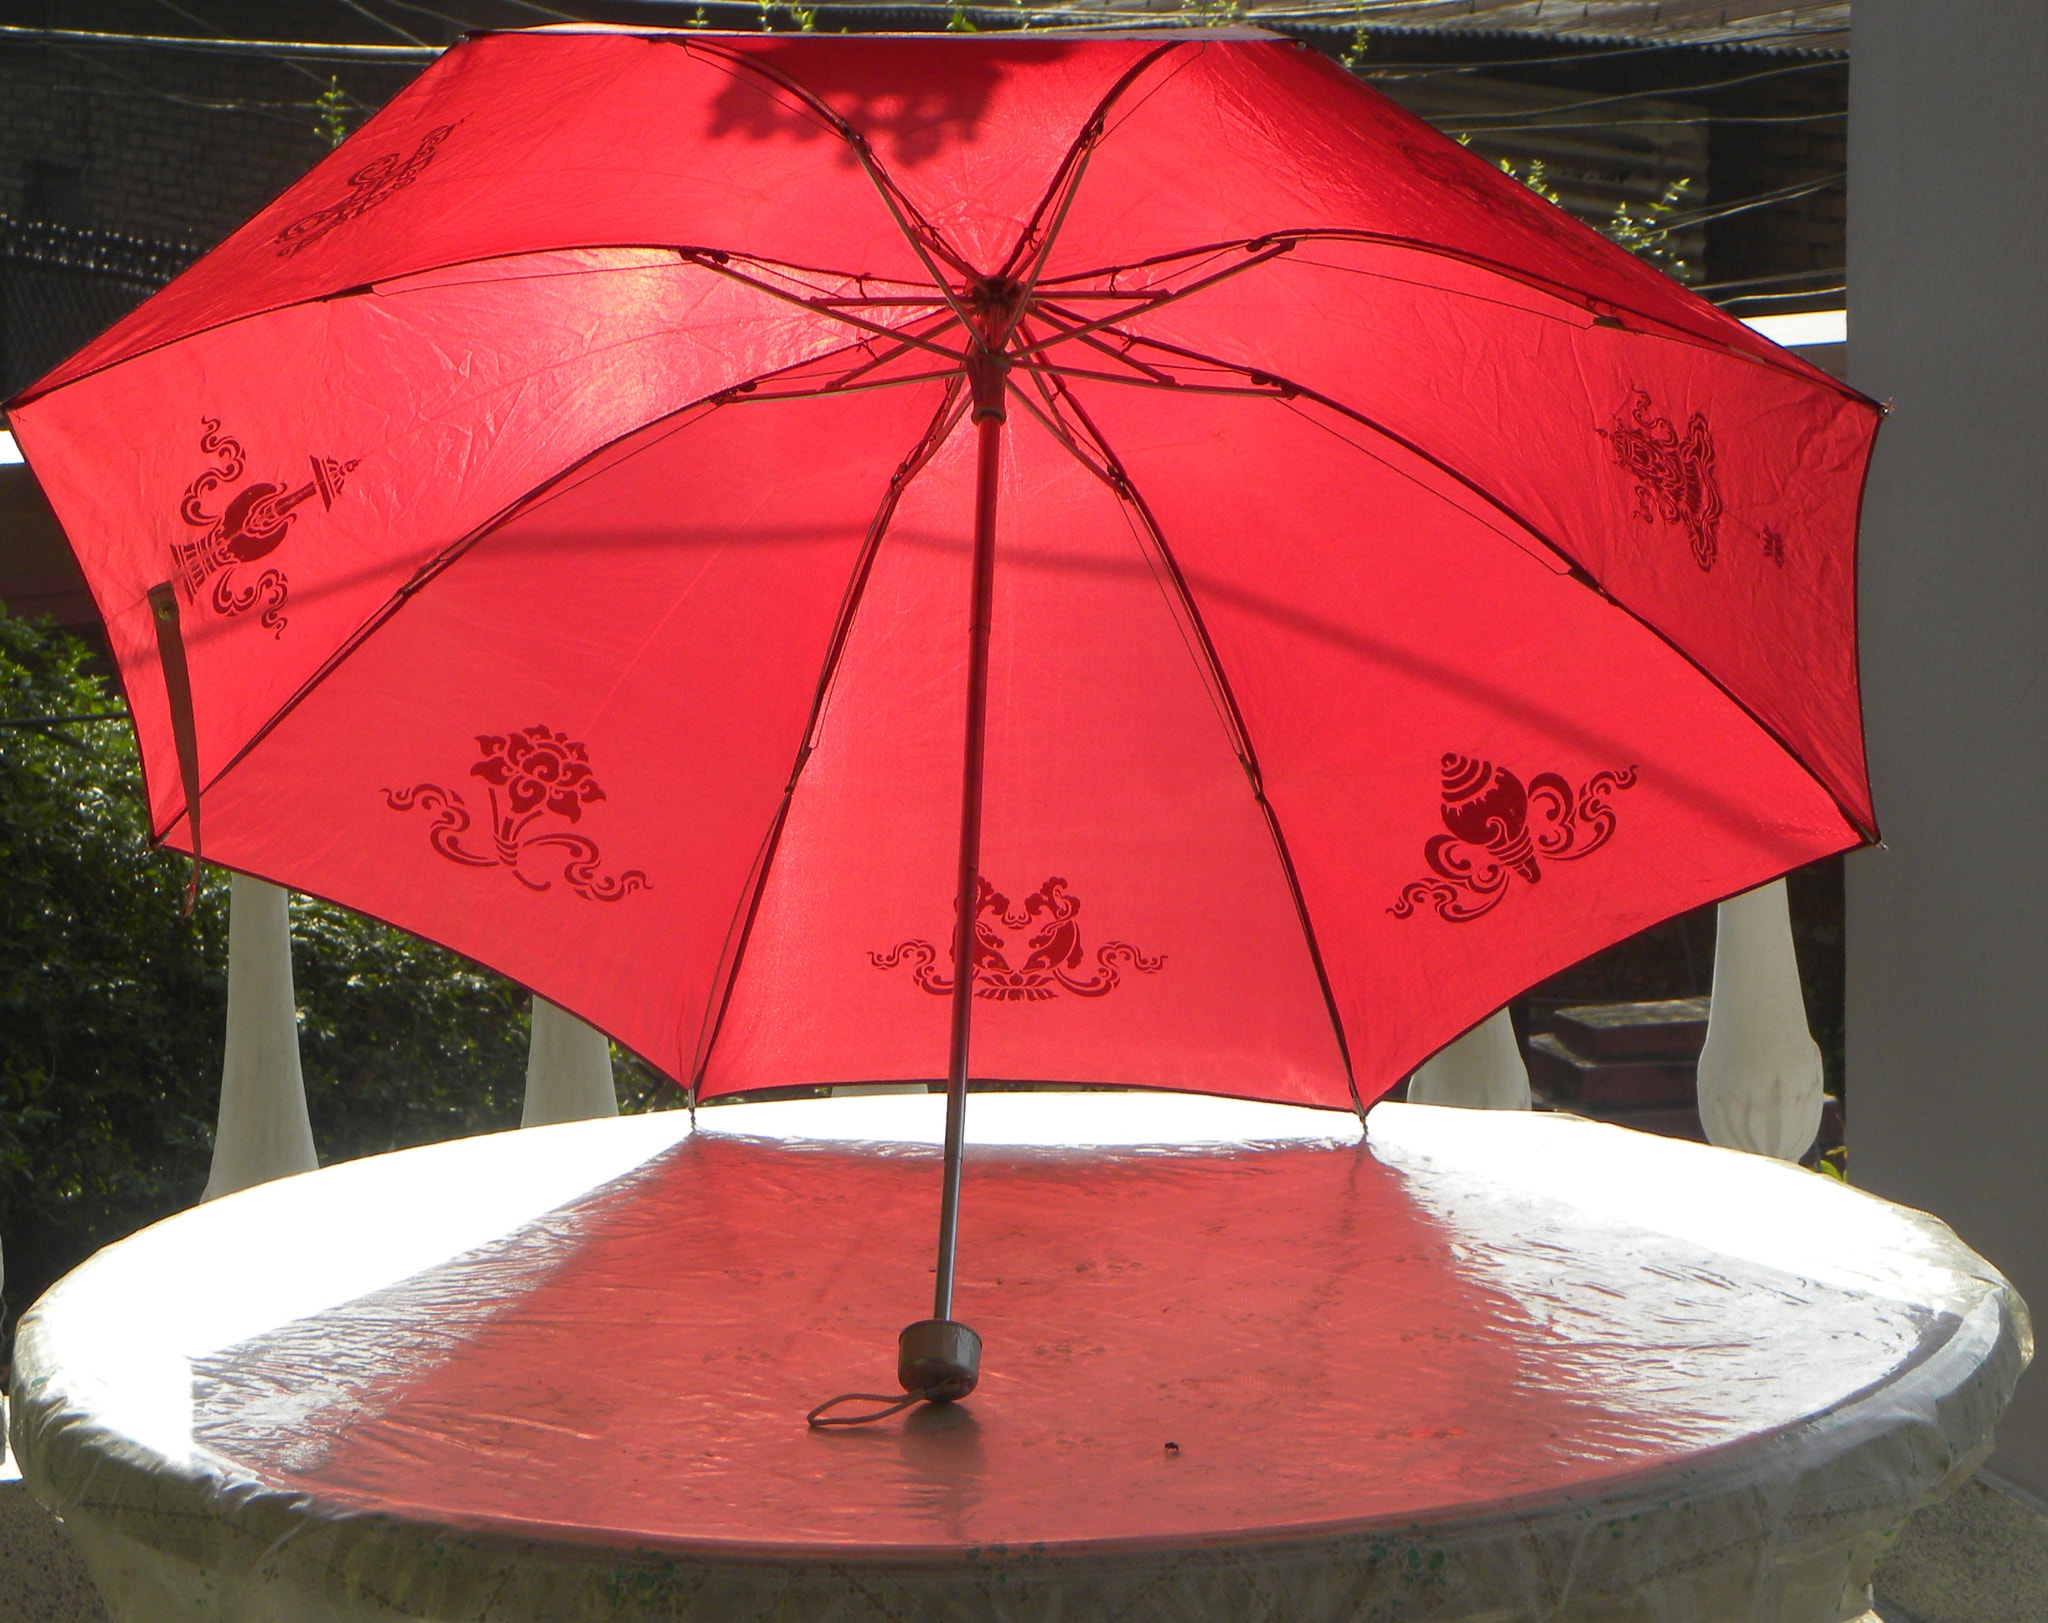 Nikon Coolpix P90 sample photo. The red umbrella photography